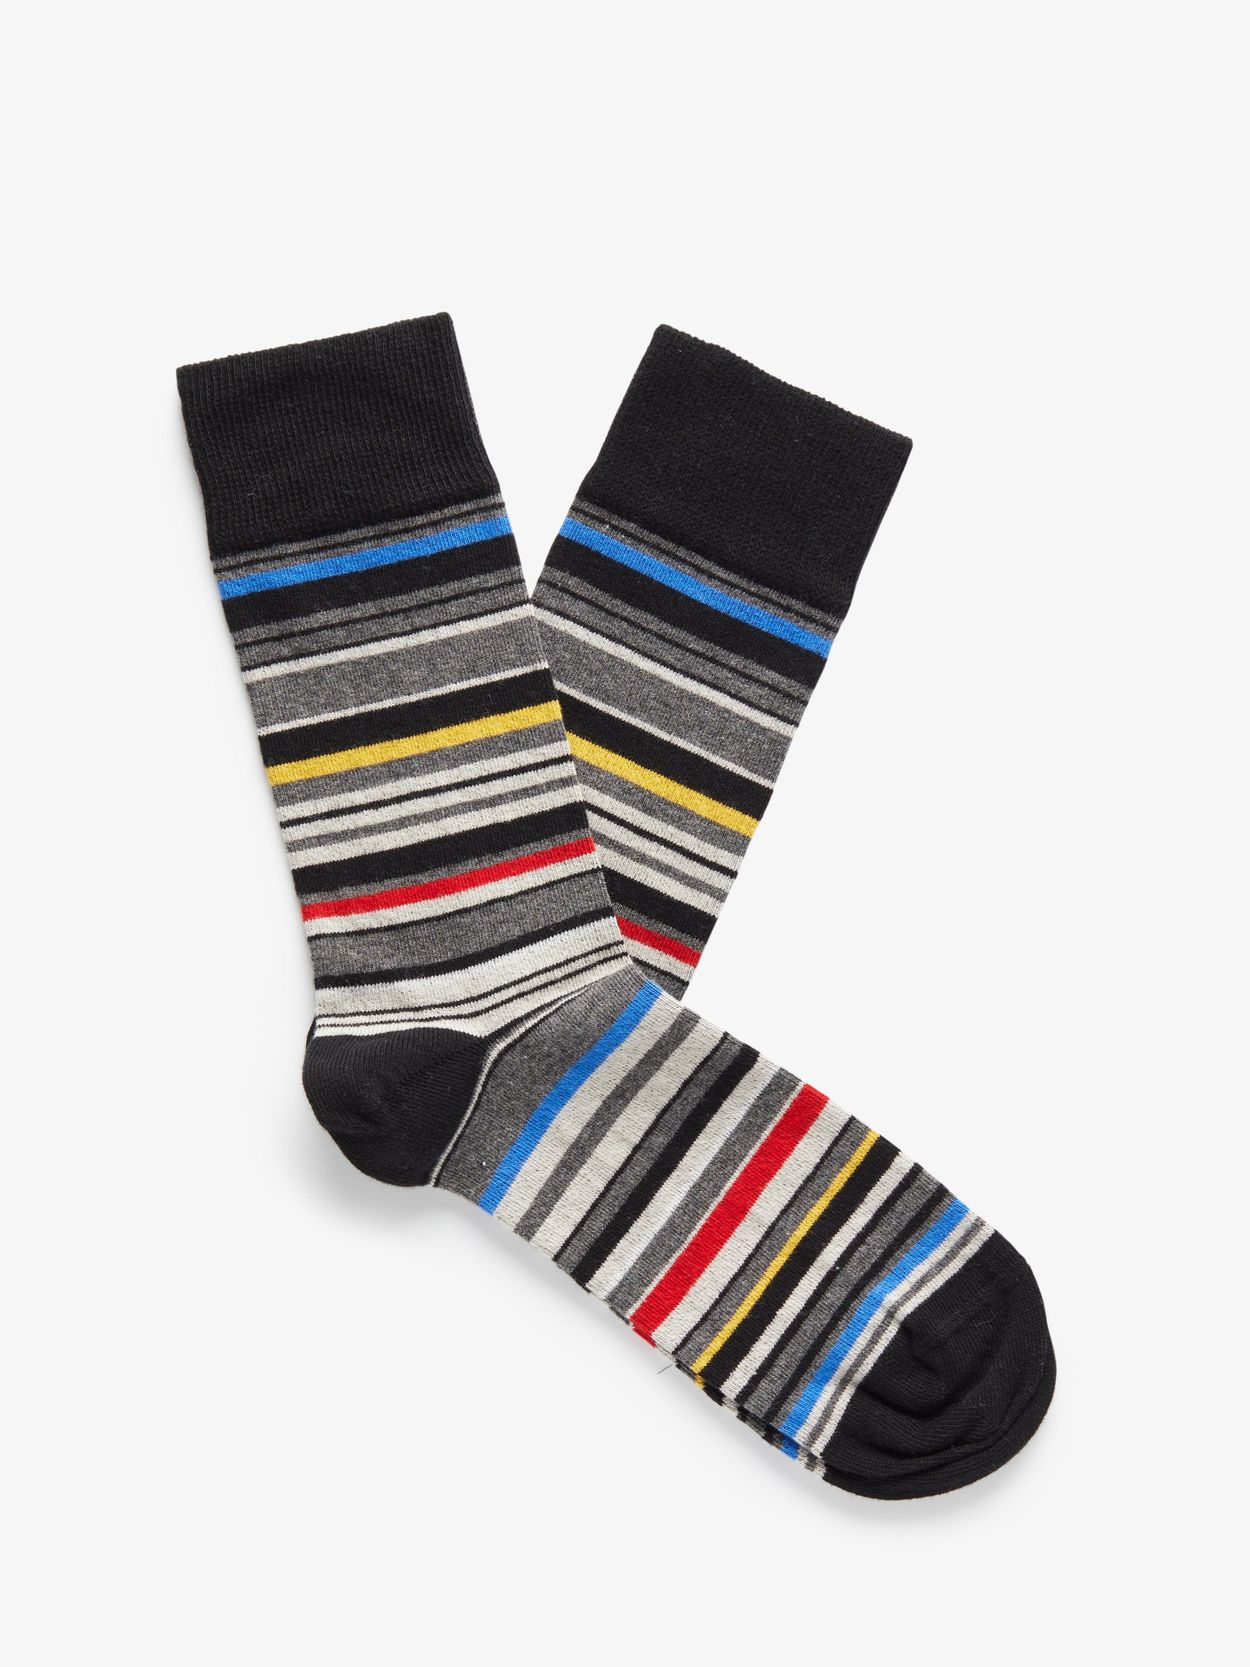 Black Socks Newport